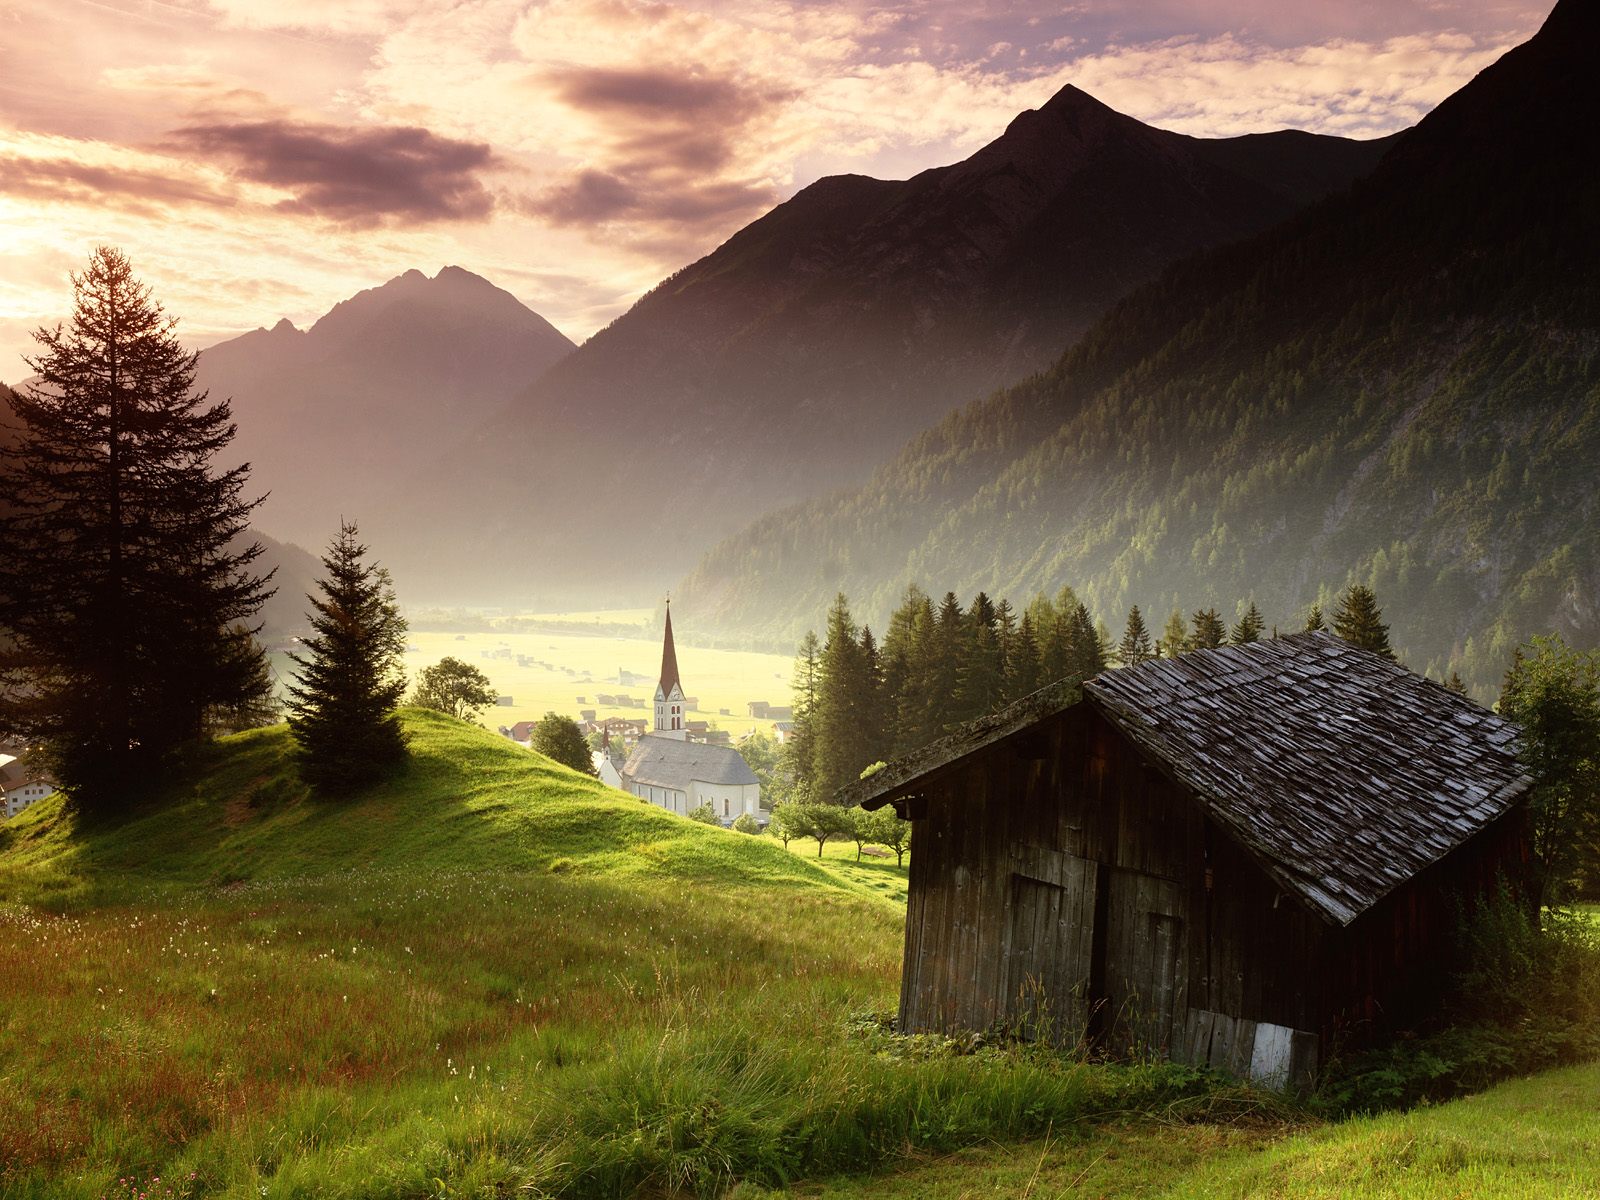 https://blogger.googleusercontent.com/img/b/R29vZ2xl/AVvXsEhajx9NqLQRN-PuIhKkuo9hyphenhyphenQh7hGfDYWCs2Tm5qYeX1beC2GrttKlZfTwM7m0BcjzUZymz7qtVbbcaBZMCQOqaxbxN798yNBTUjVHGc3pX1dpZAR51M4II6KCThawJyiz14lSDuDrJGto/s1600/Misty_Mountain_Tyrol-Austria.jpg